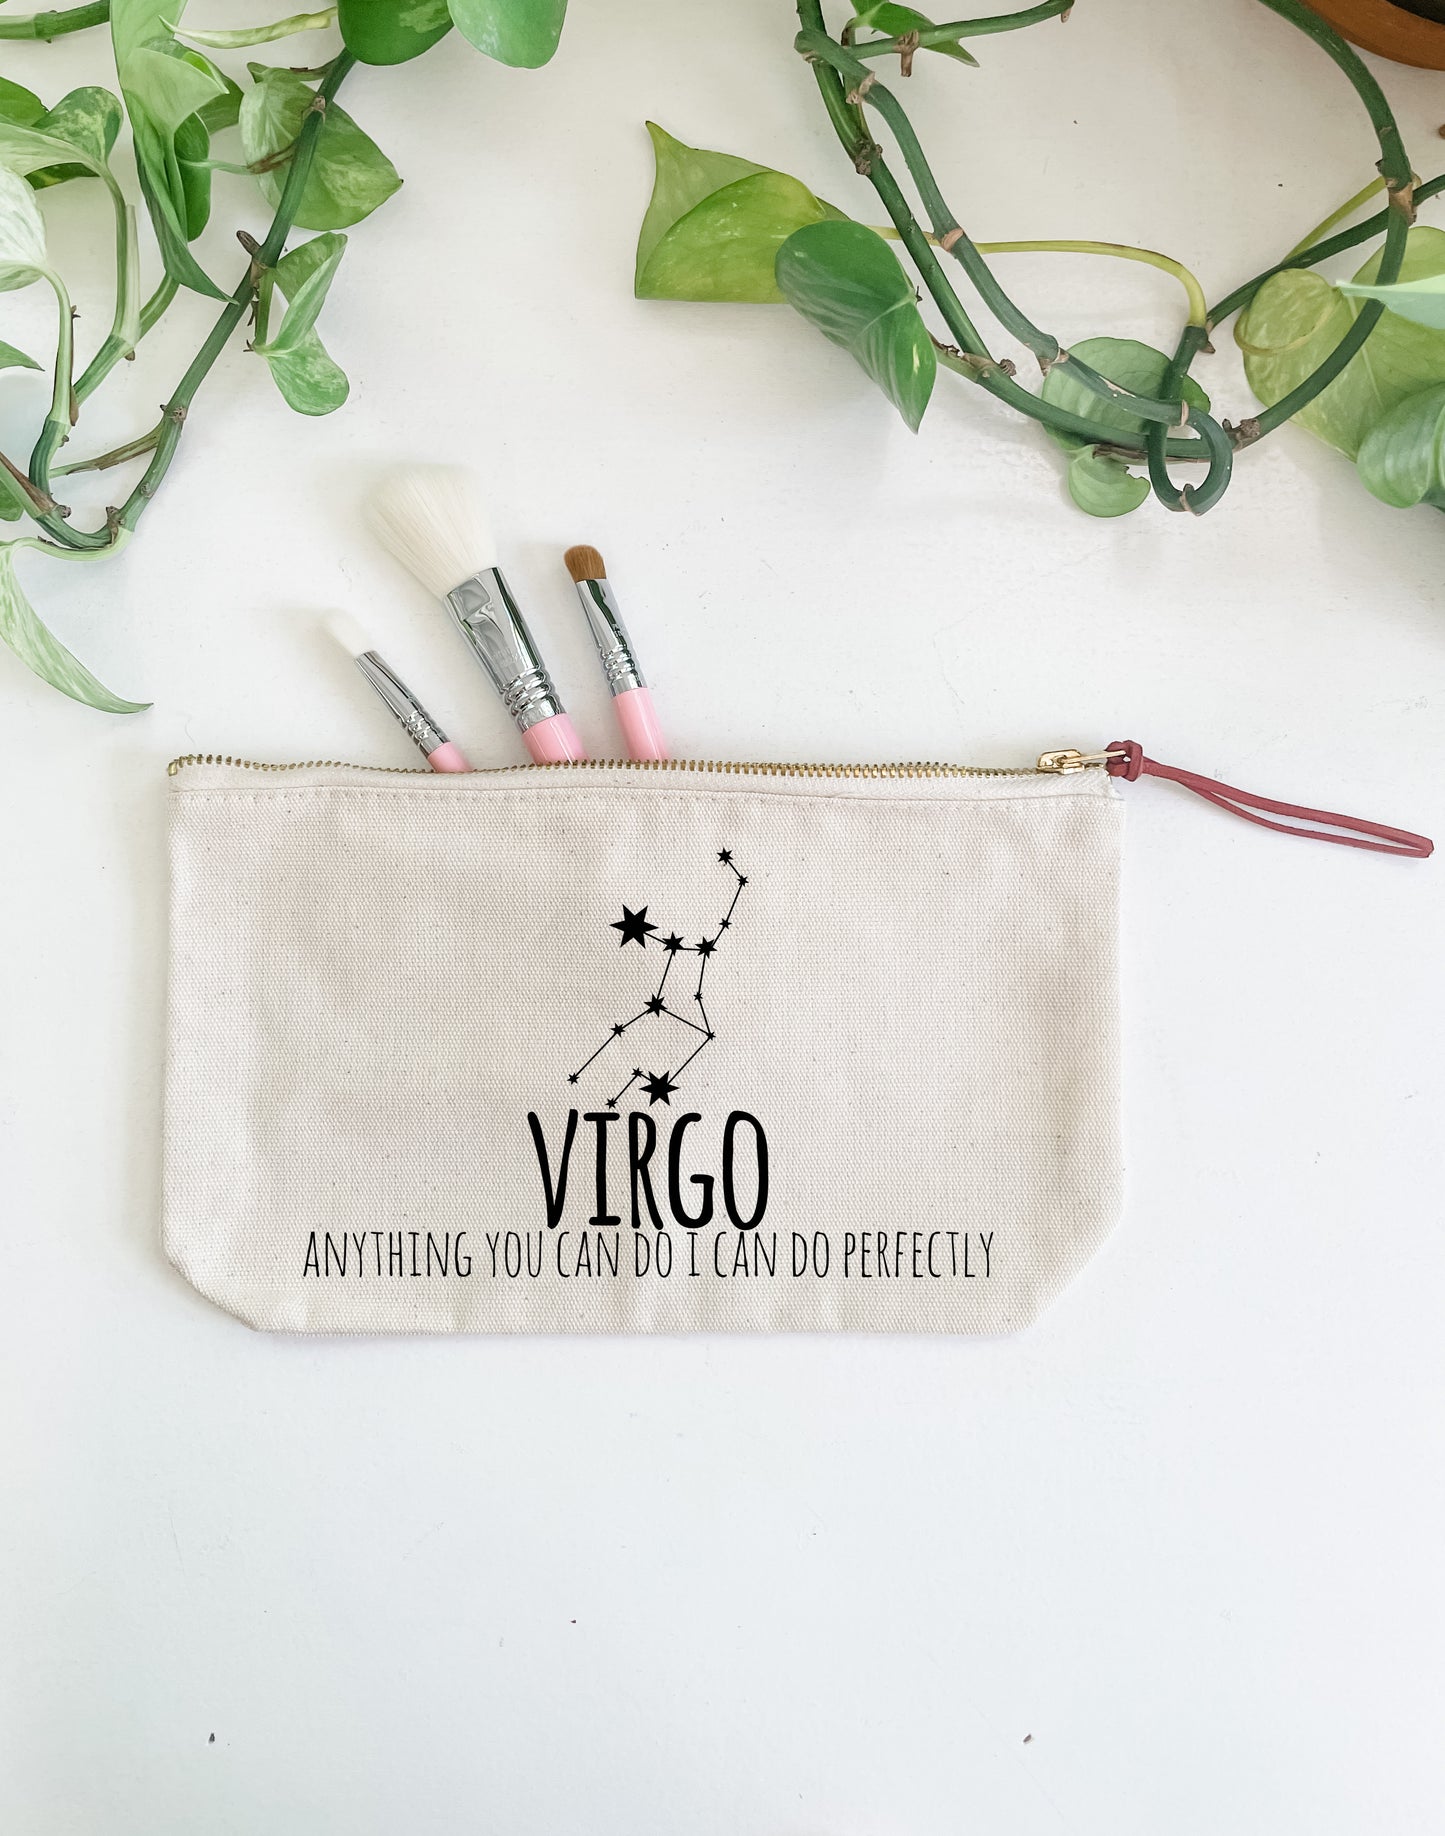 Virgo (Signs Of The Zodiac) - Canvas Zipper Pouch